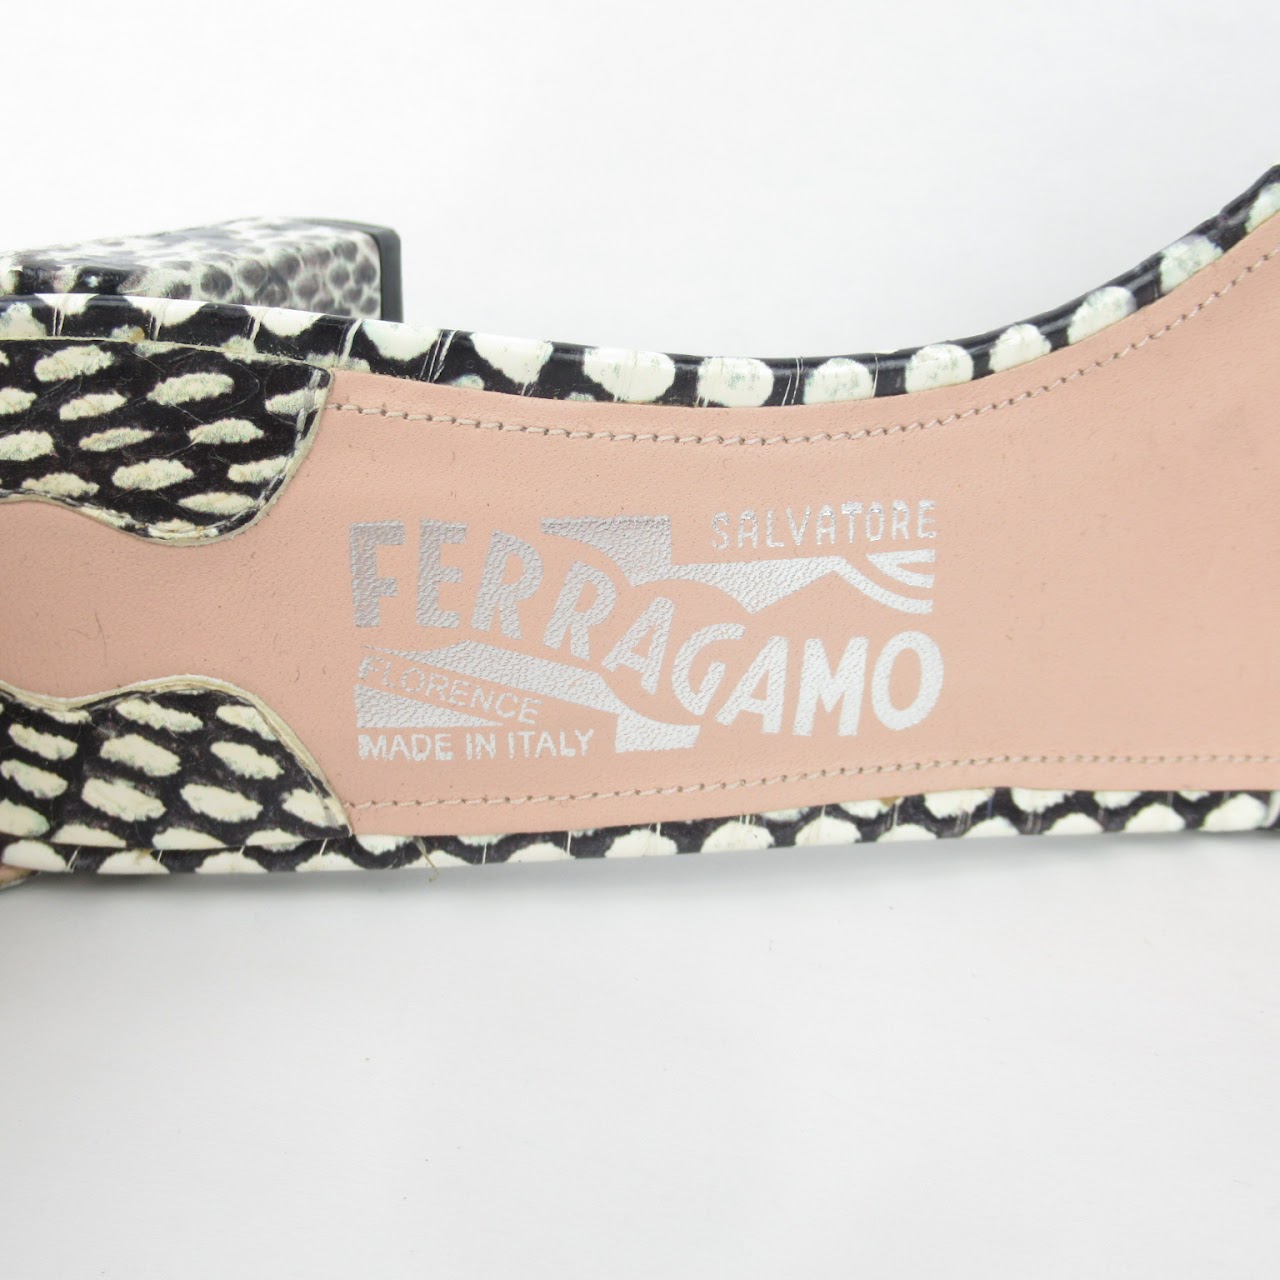 Salvatore Ferragamo Snake Print Sandals